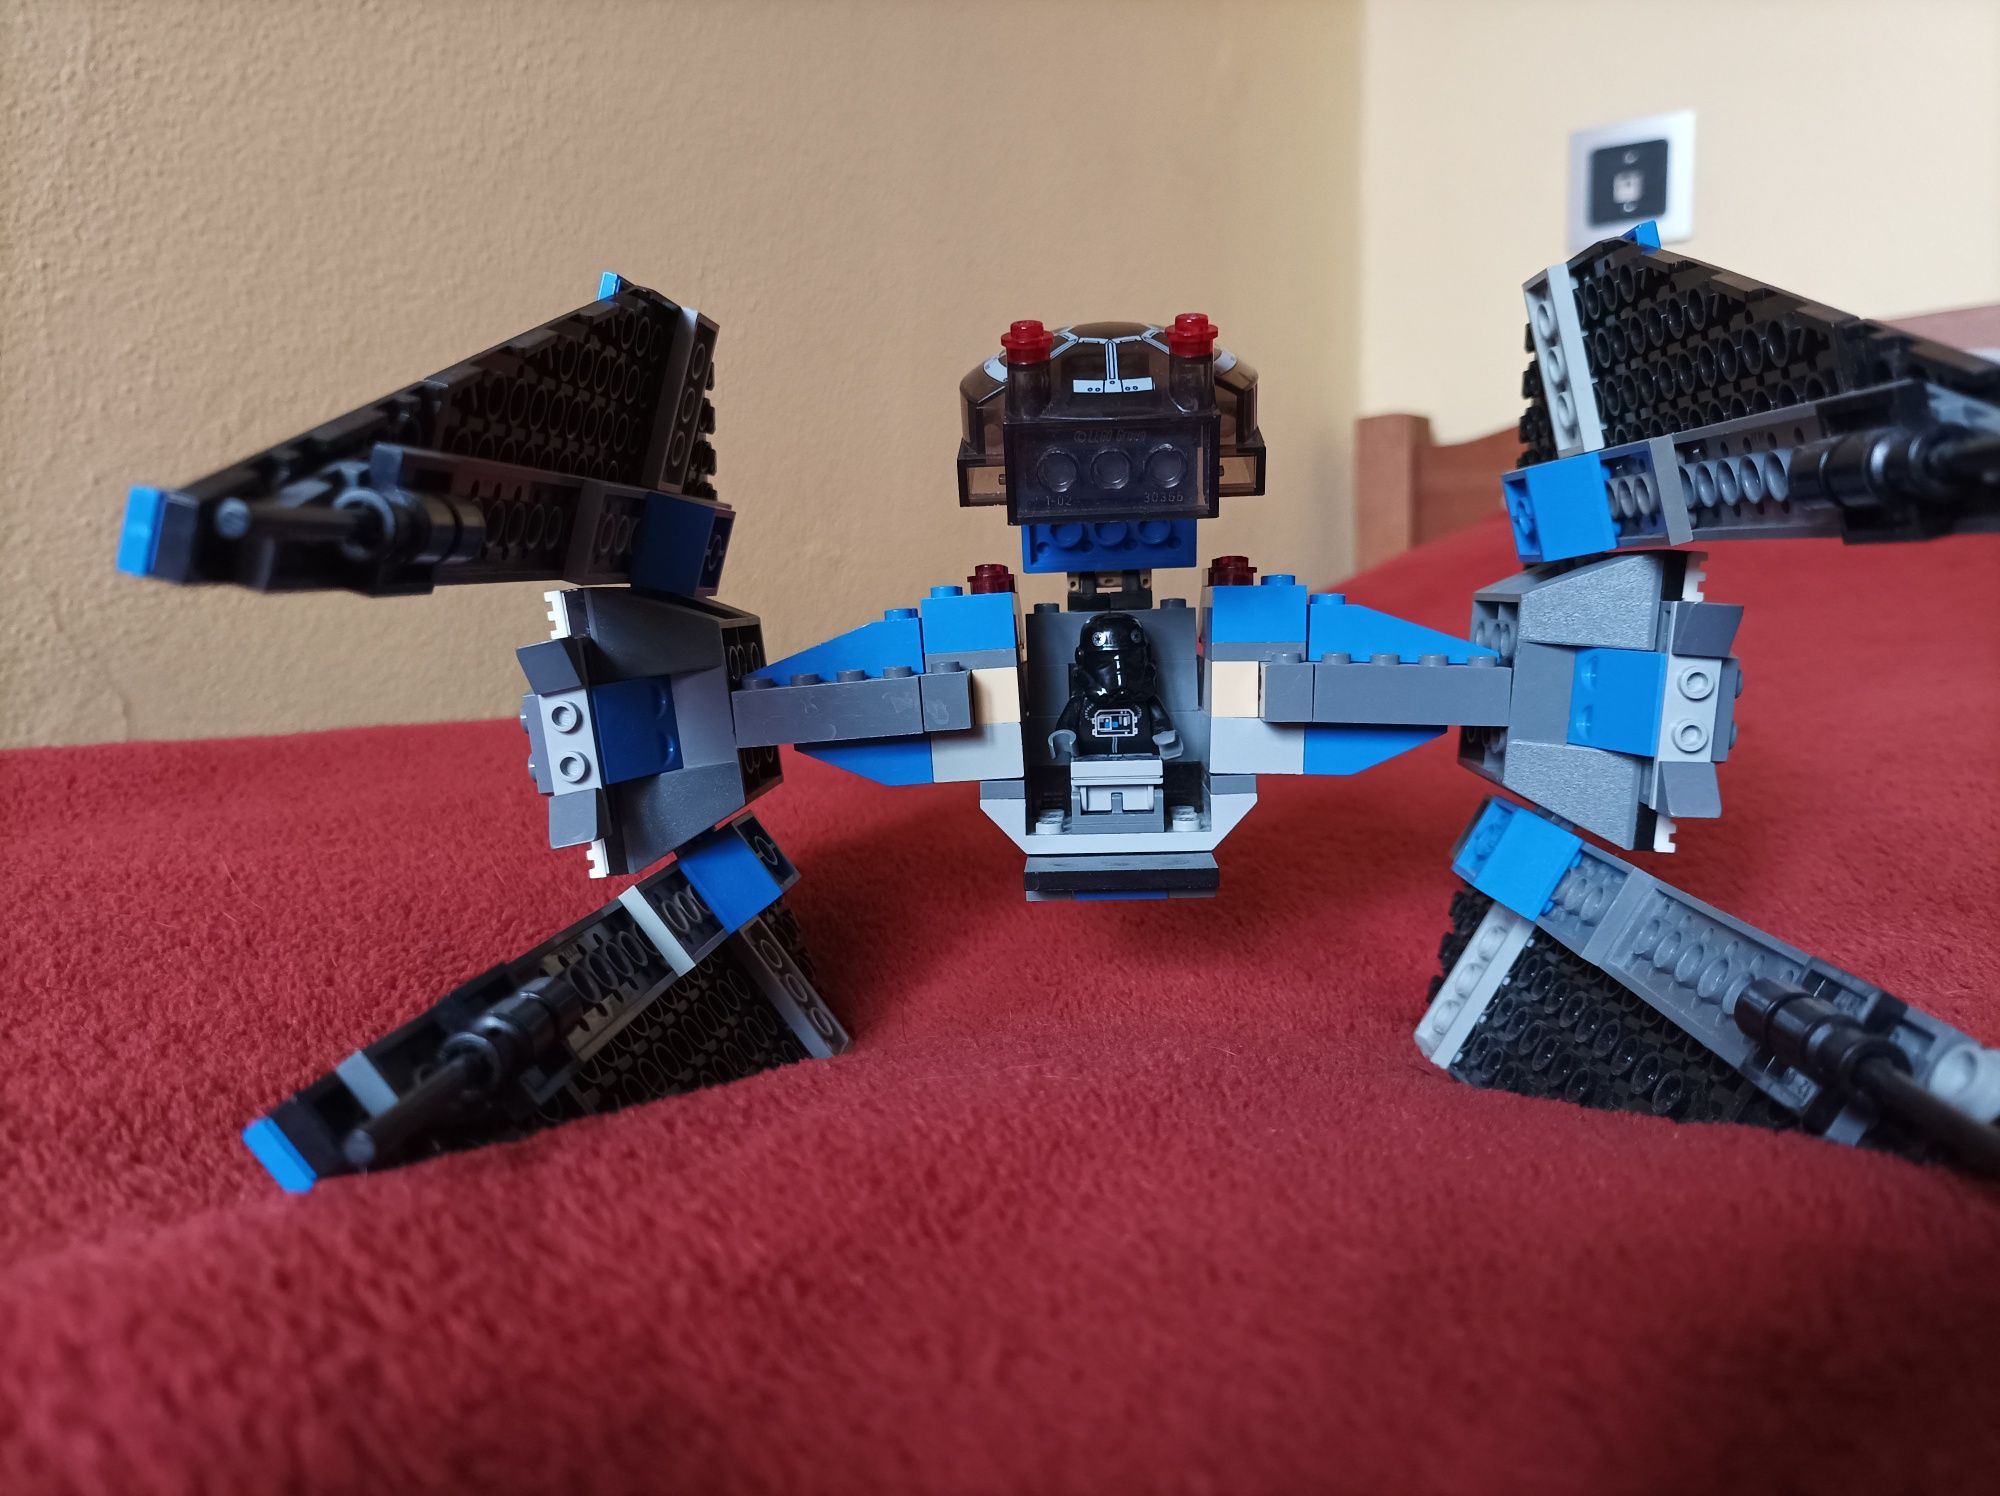 LEGO Star Wars 6206 TIE Interceptor Fighter, okazja !